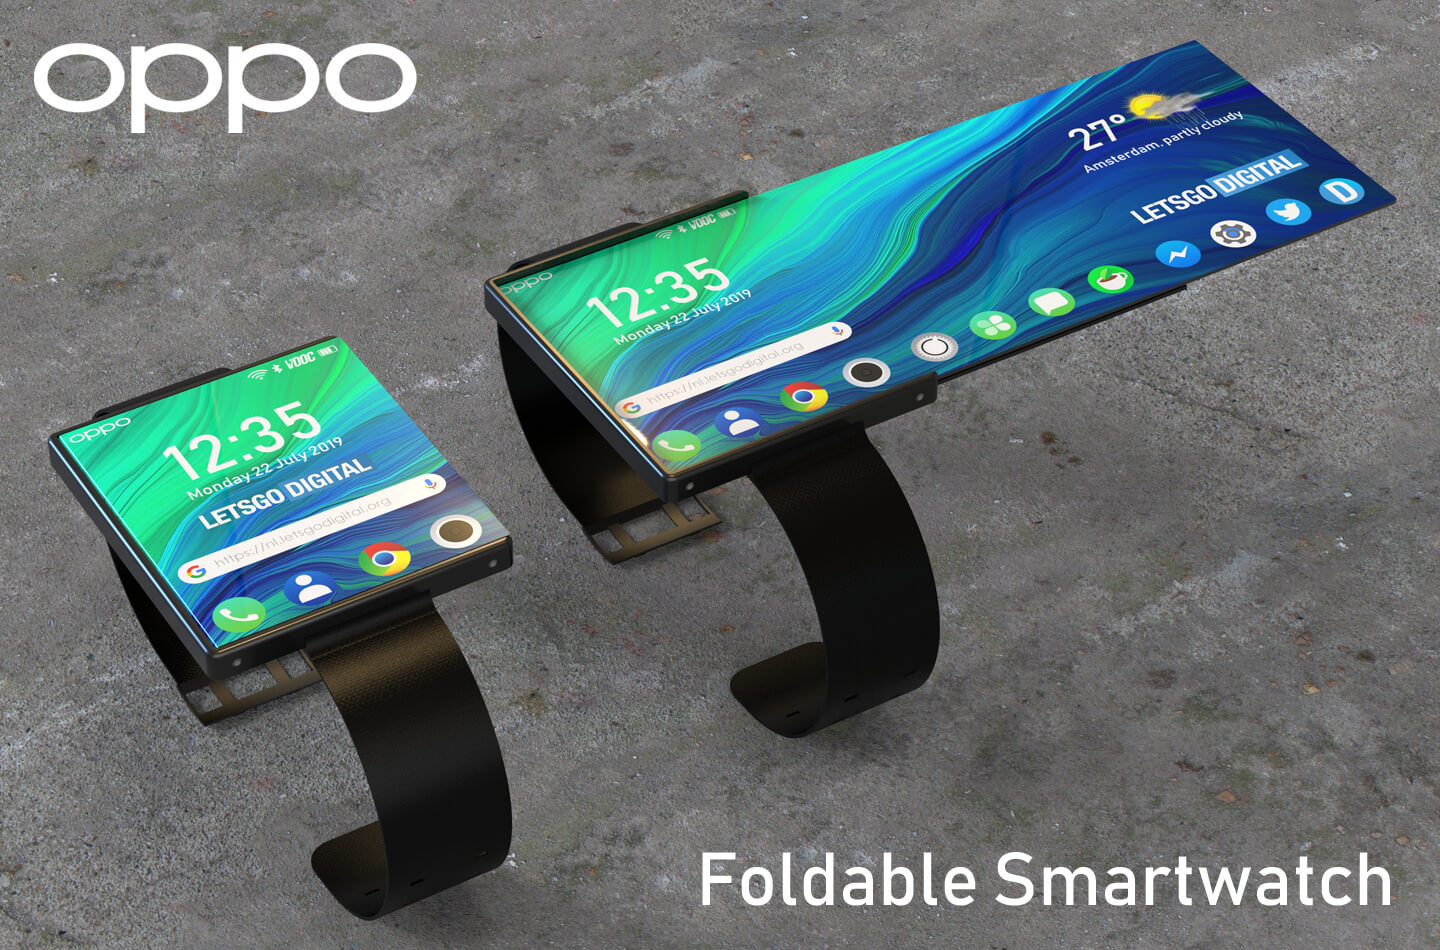 Oppo Foldable Smartwatch